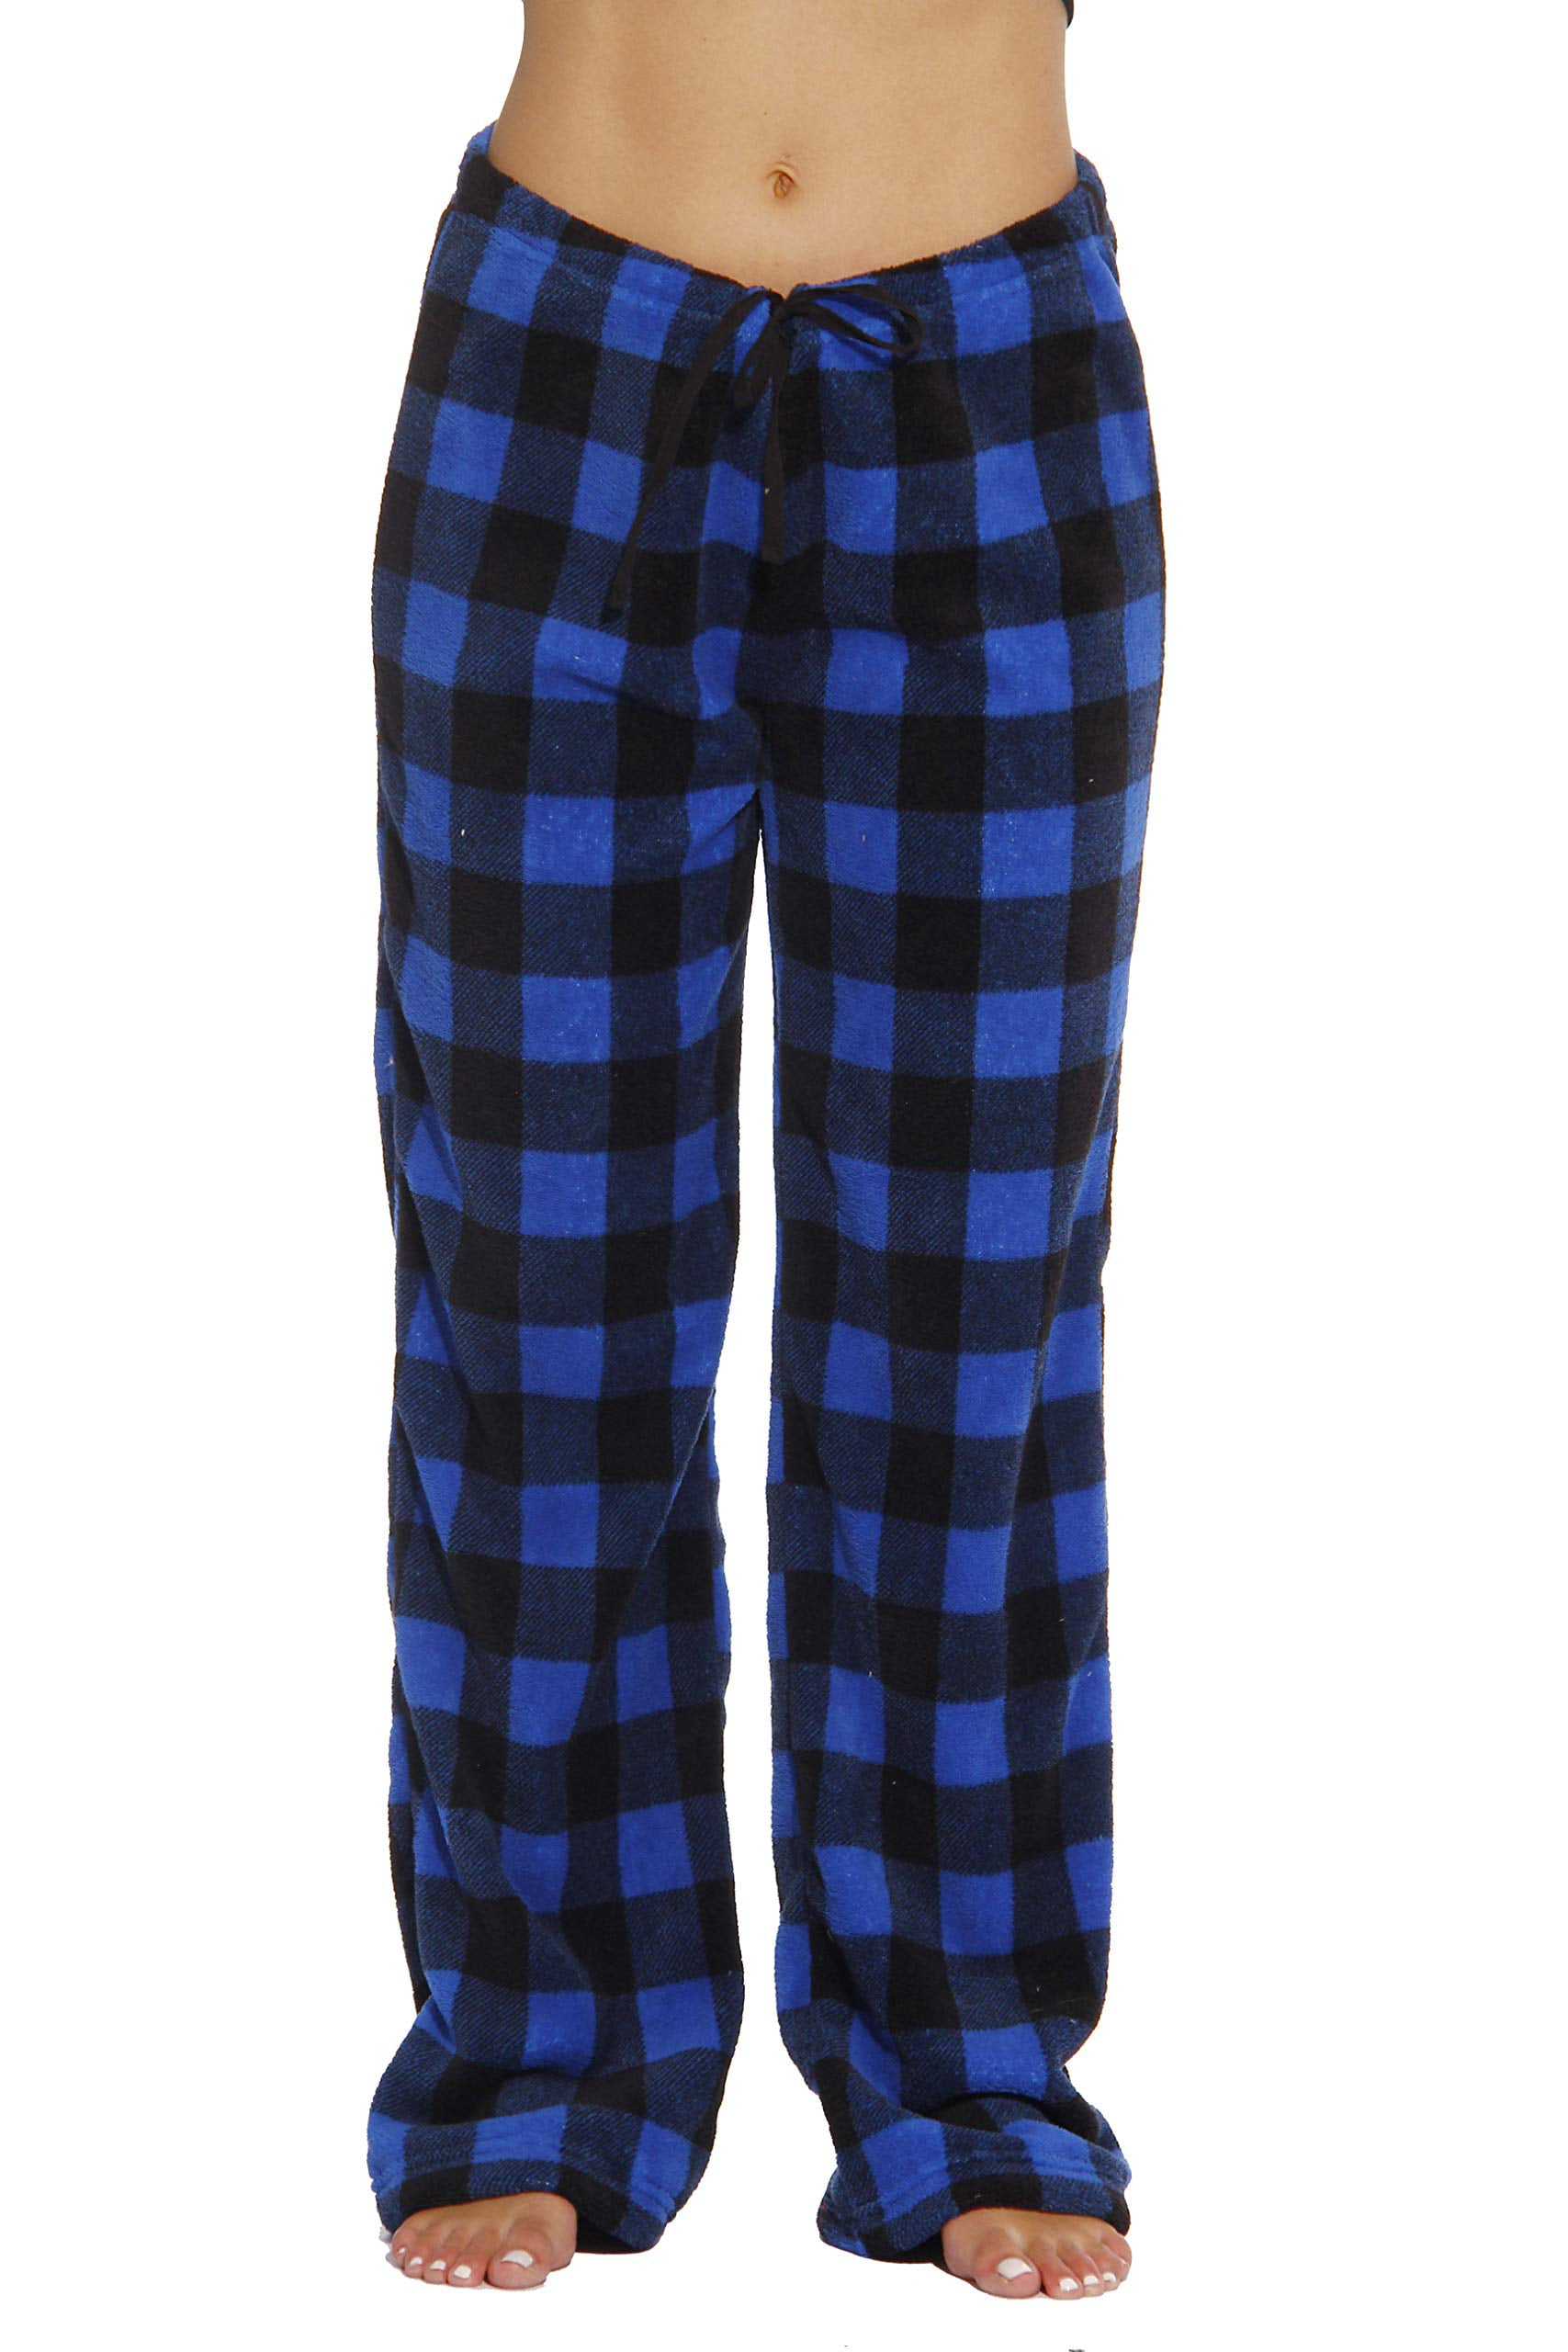 Just Love Women's Fleece Pajama Pants - Soft and Cozy